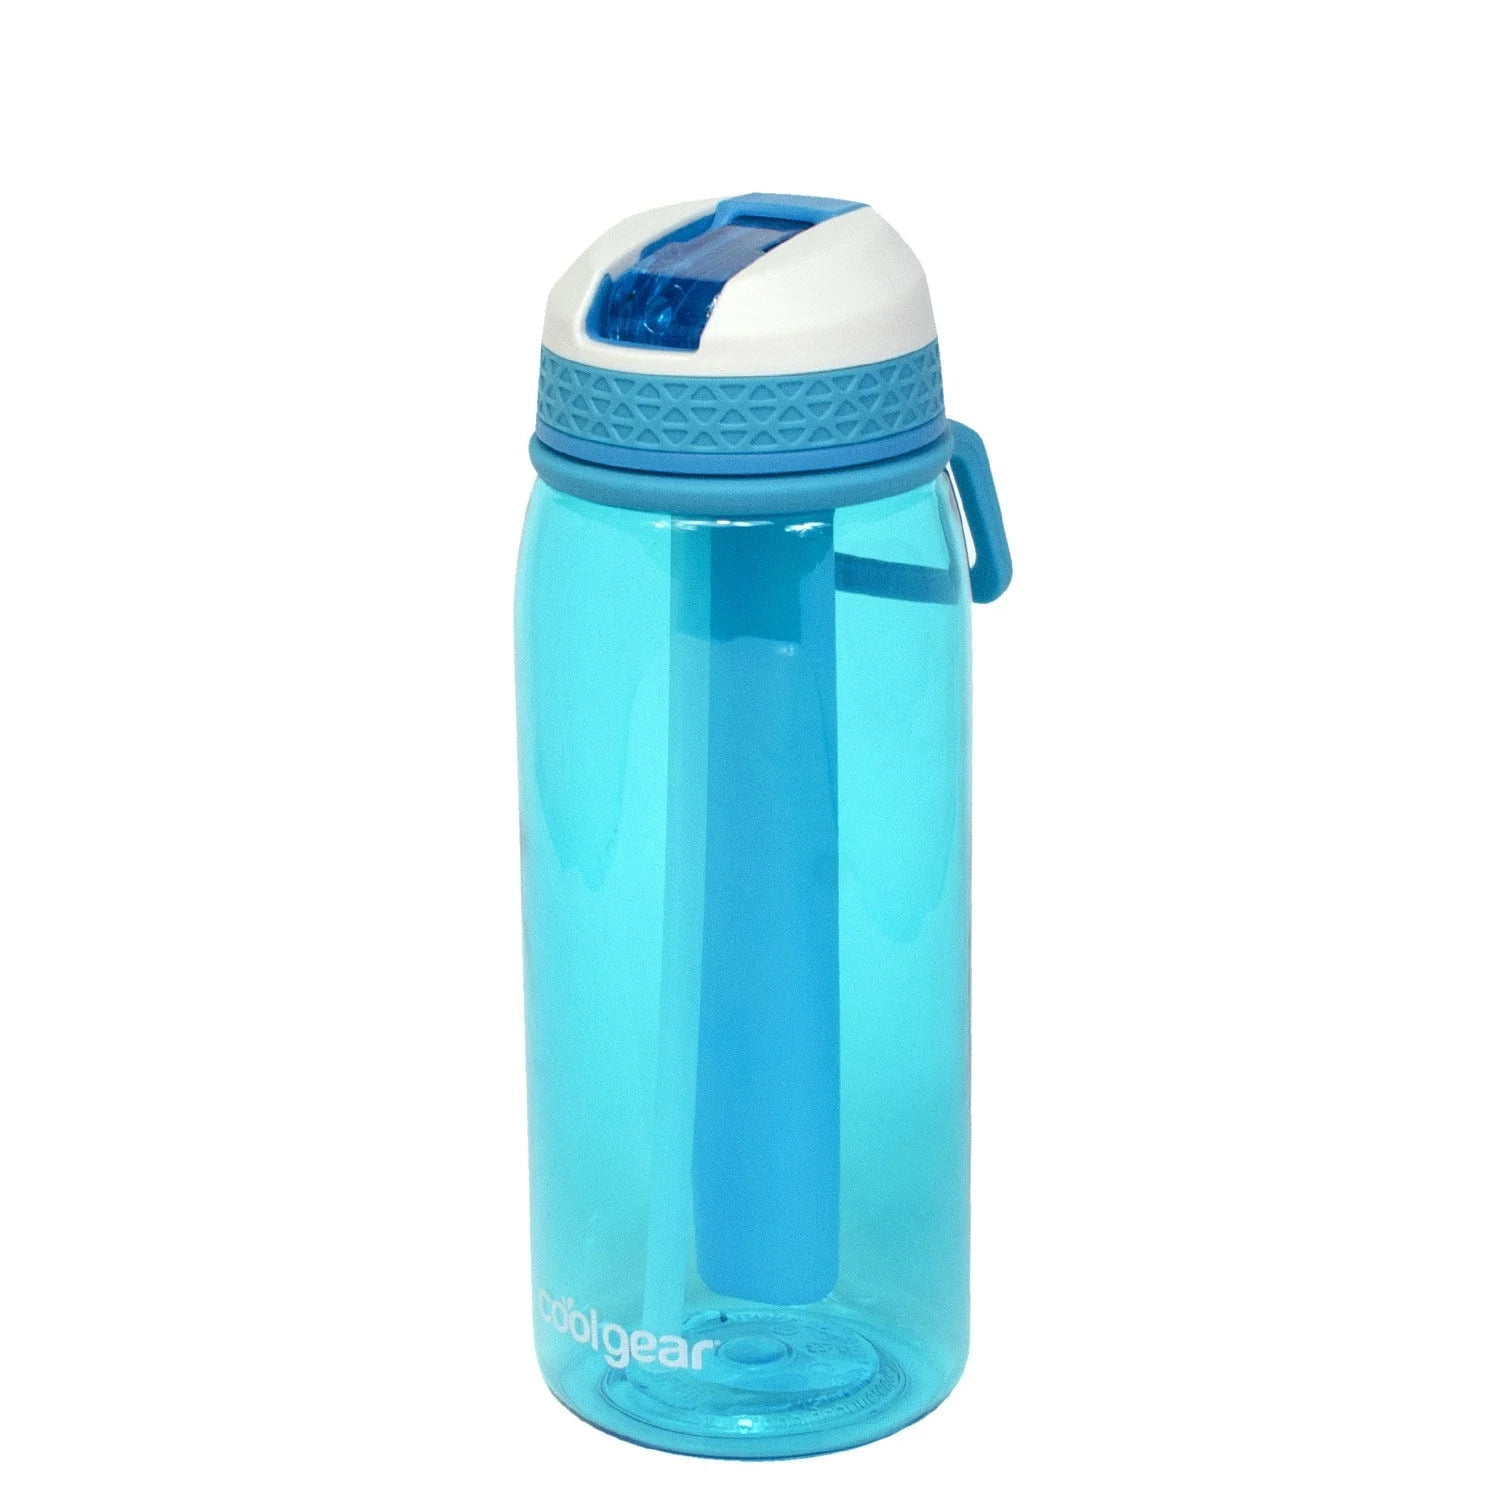 Teal Let's Chill Freezer Gel Water Bottle, 32 oz.